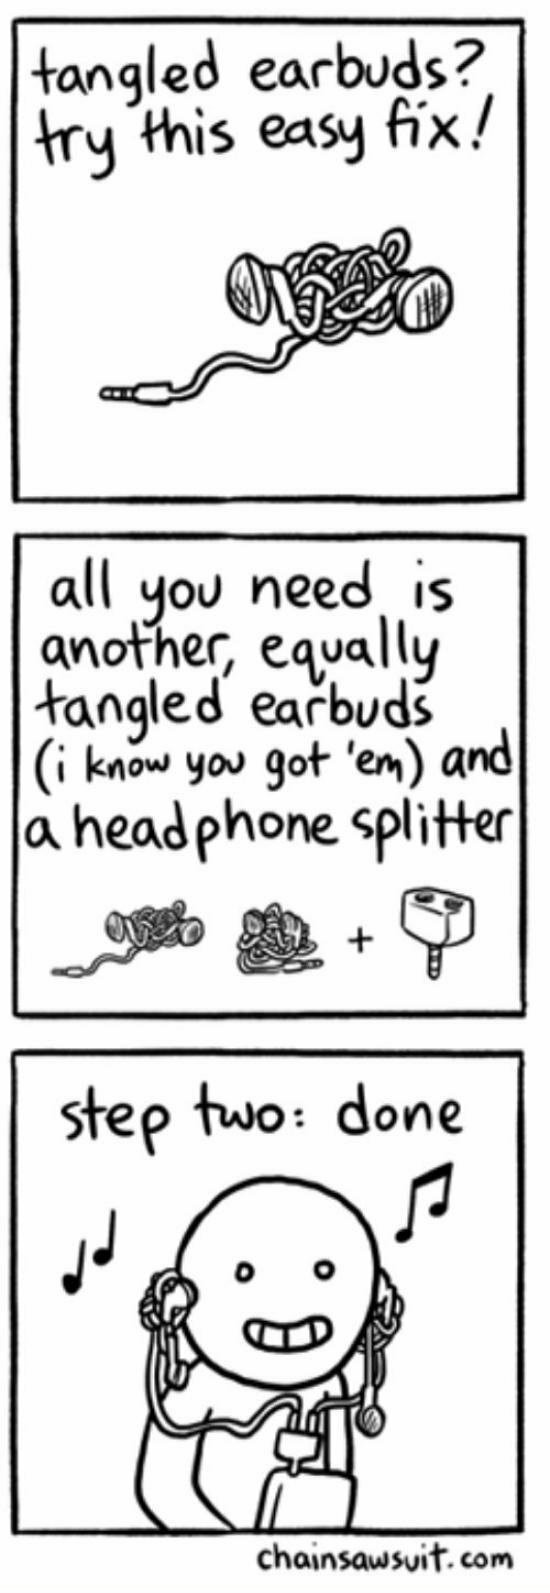 Tangled Earphones Fix - meme